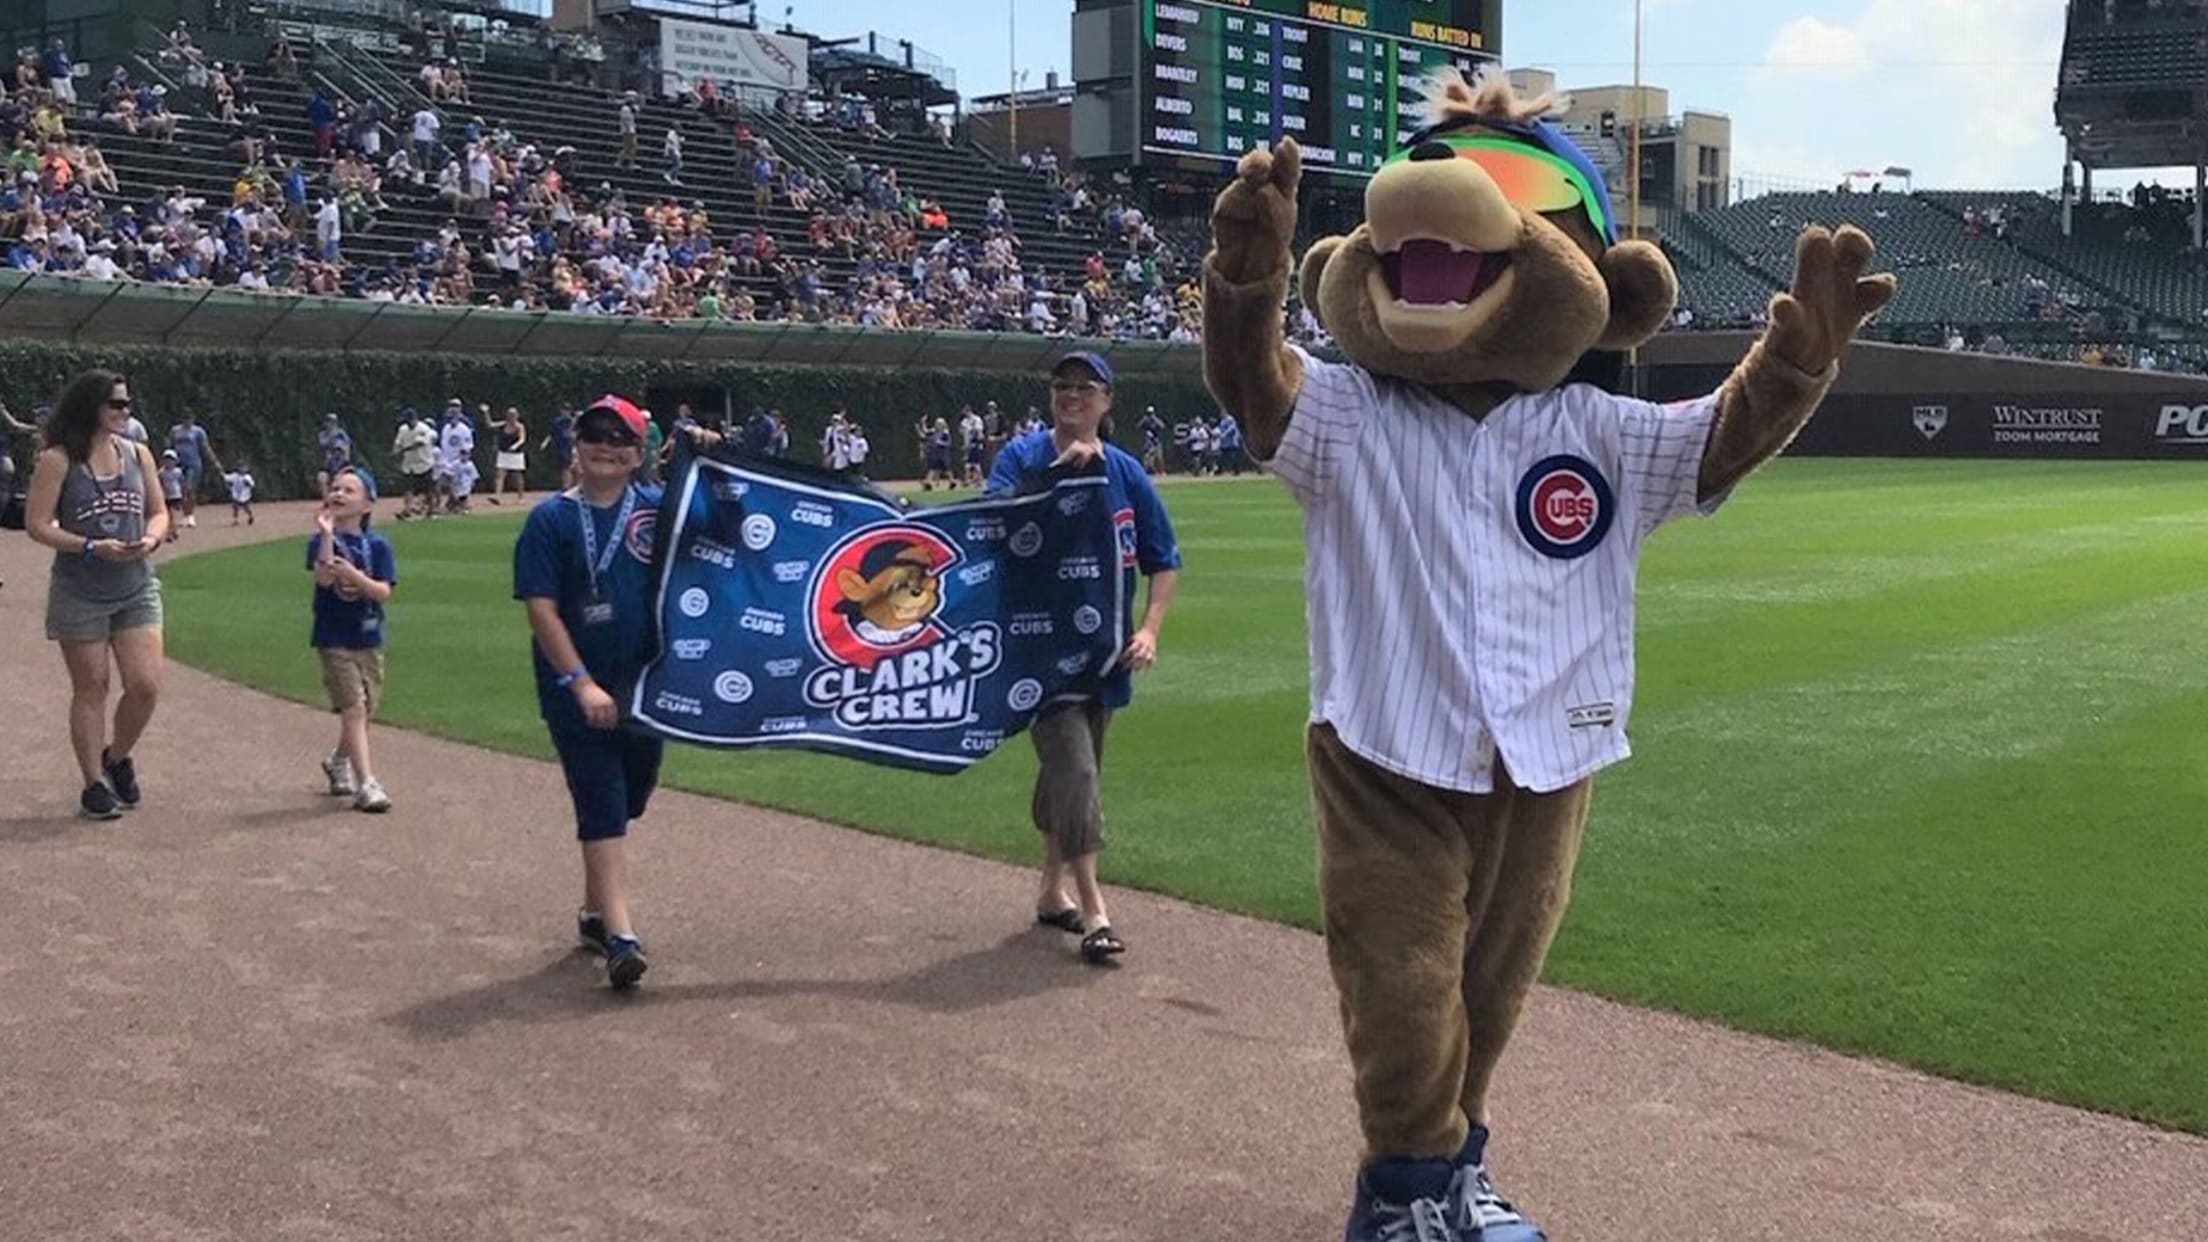 Chicago Cubs Youth 3/4 Sleeve Raglan Baseball T-Shirt - Clark